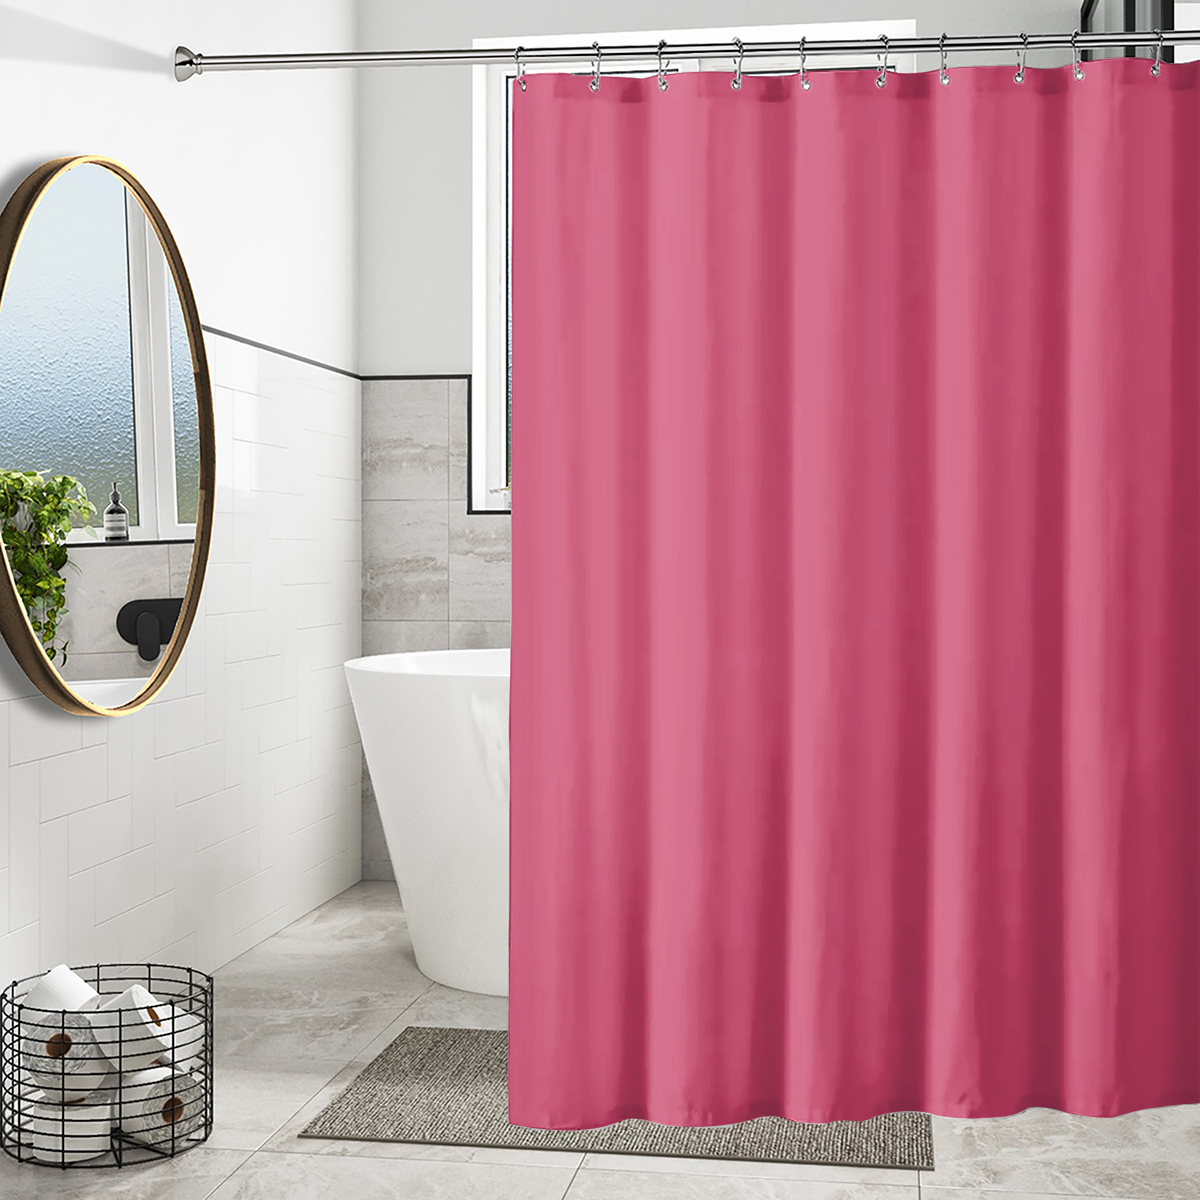 Mildew Resistant Waterproof Vinyl Magnet Grommet Shower Curtain Liner For Bathroom - White